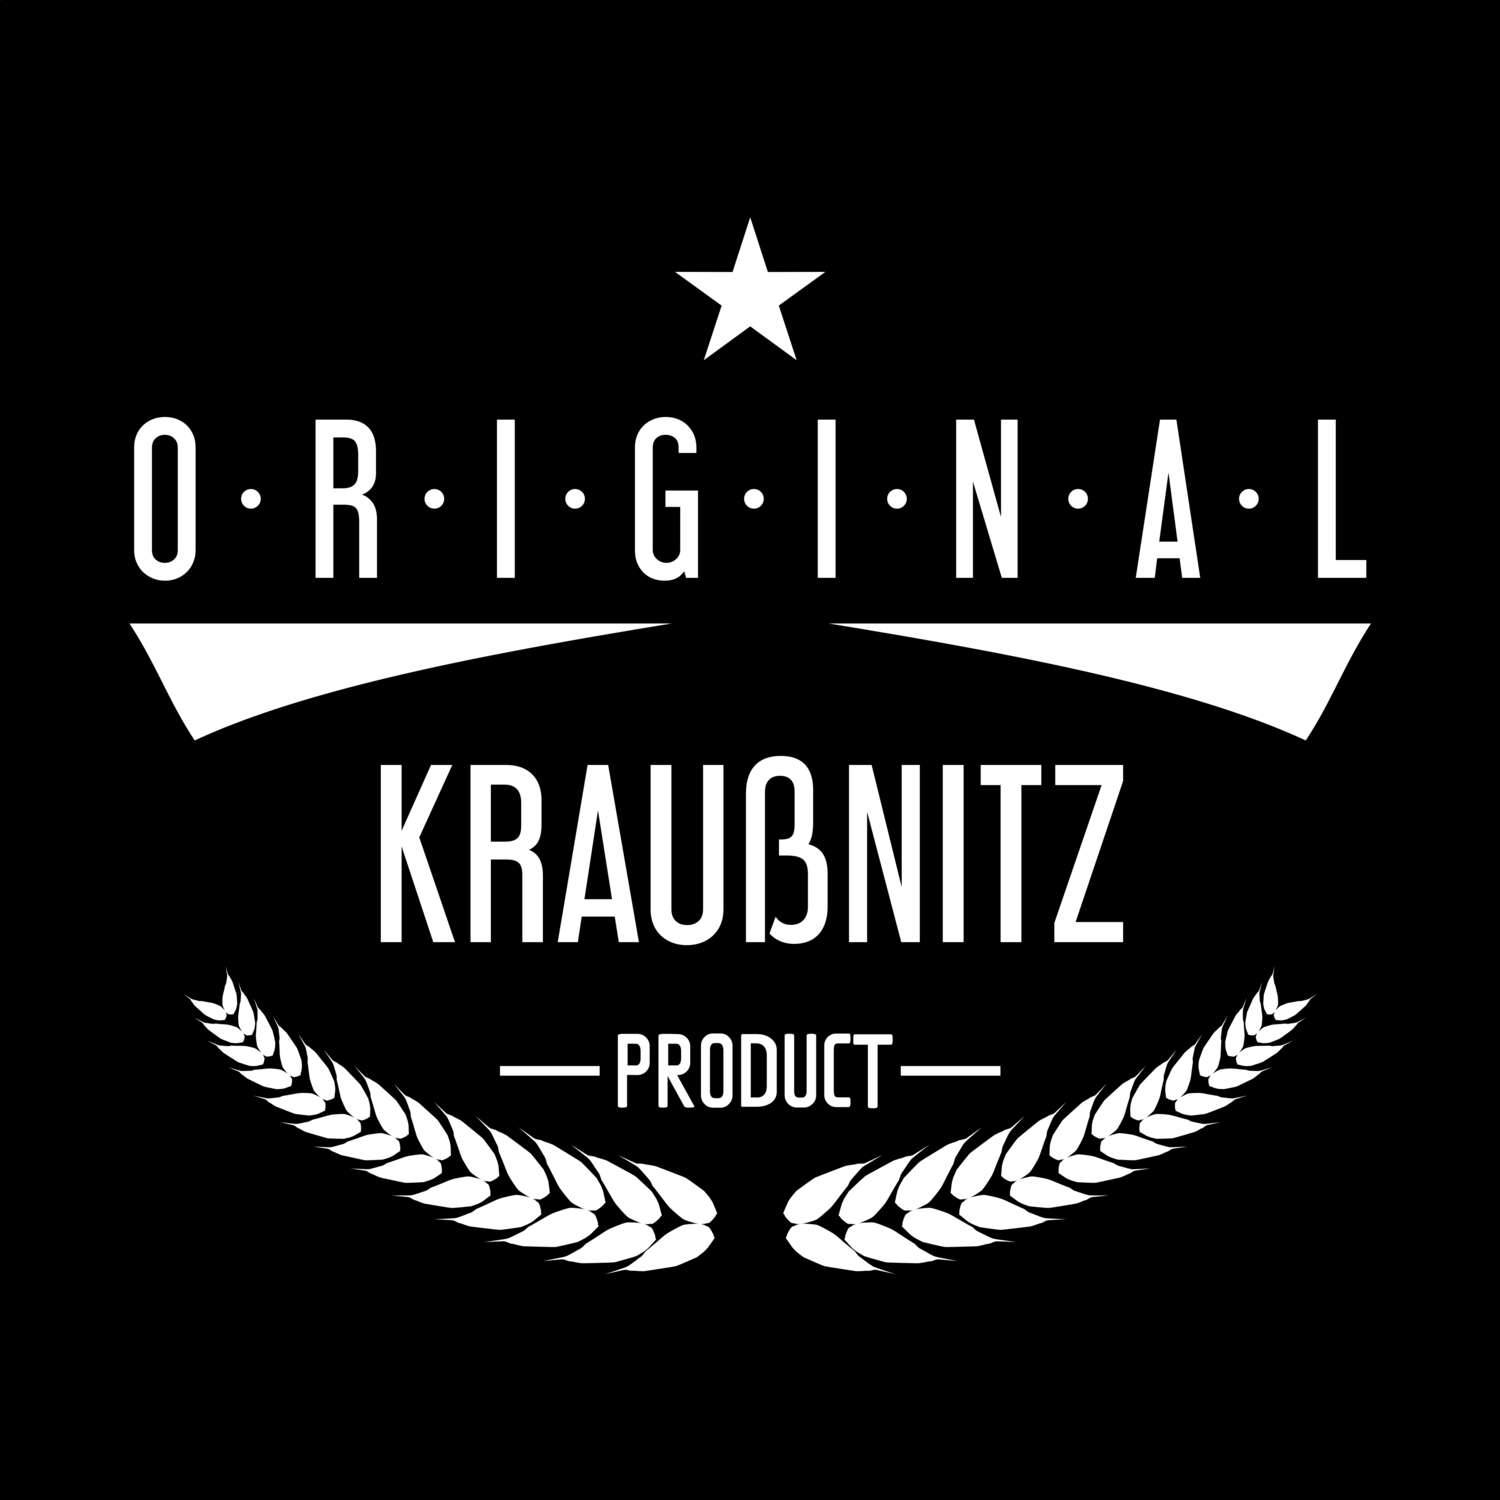 Kraußnitz T-Shirt »Original Product«